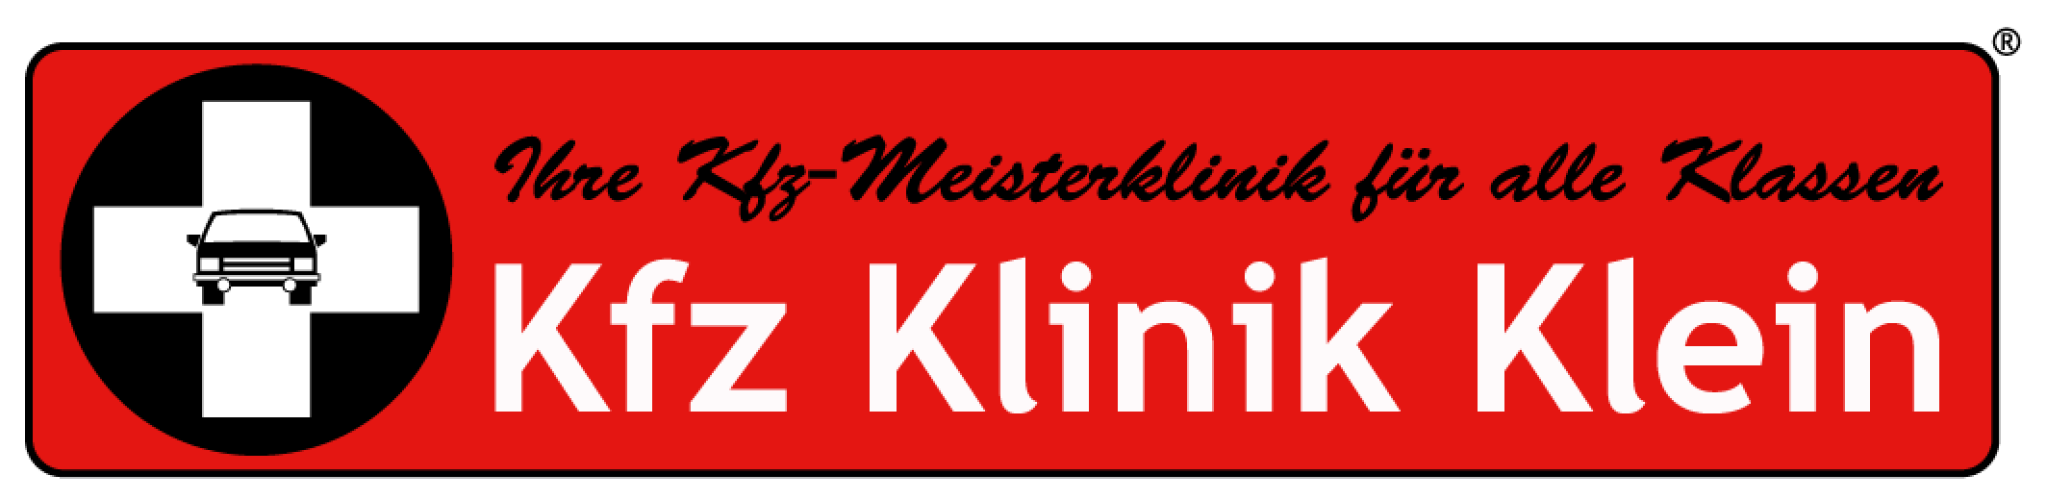 Kfz Klinik Klein GmbH